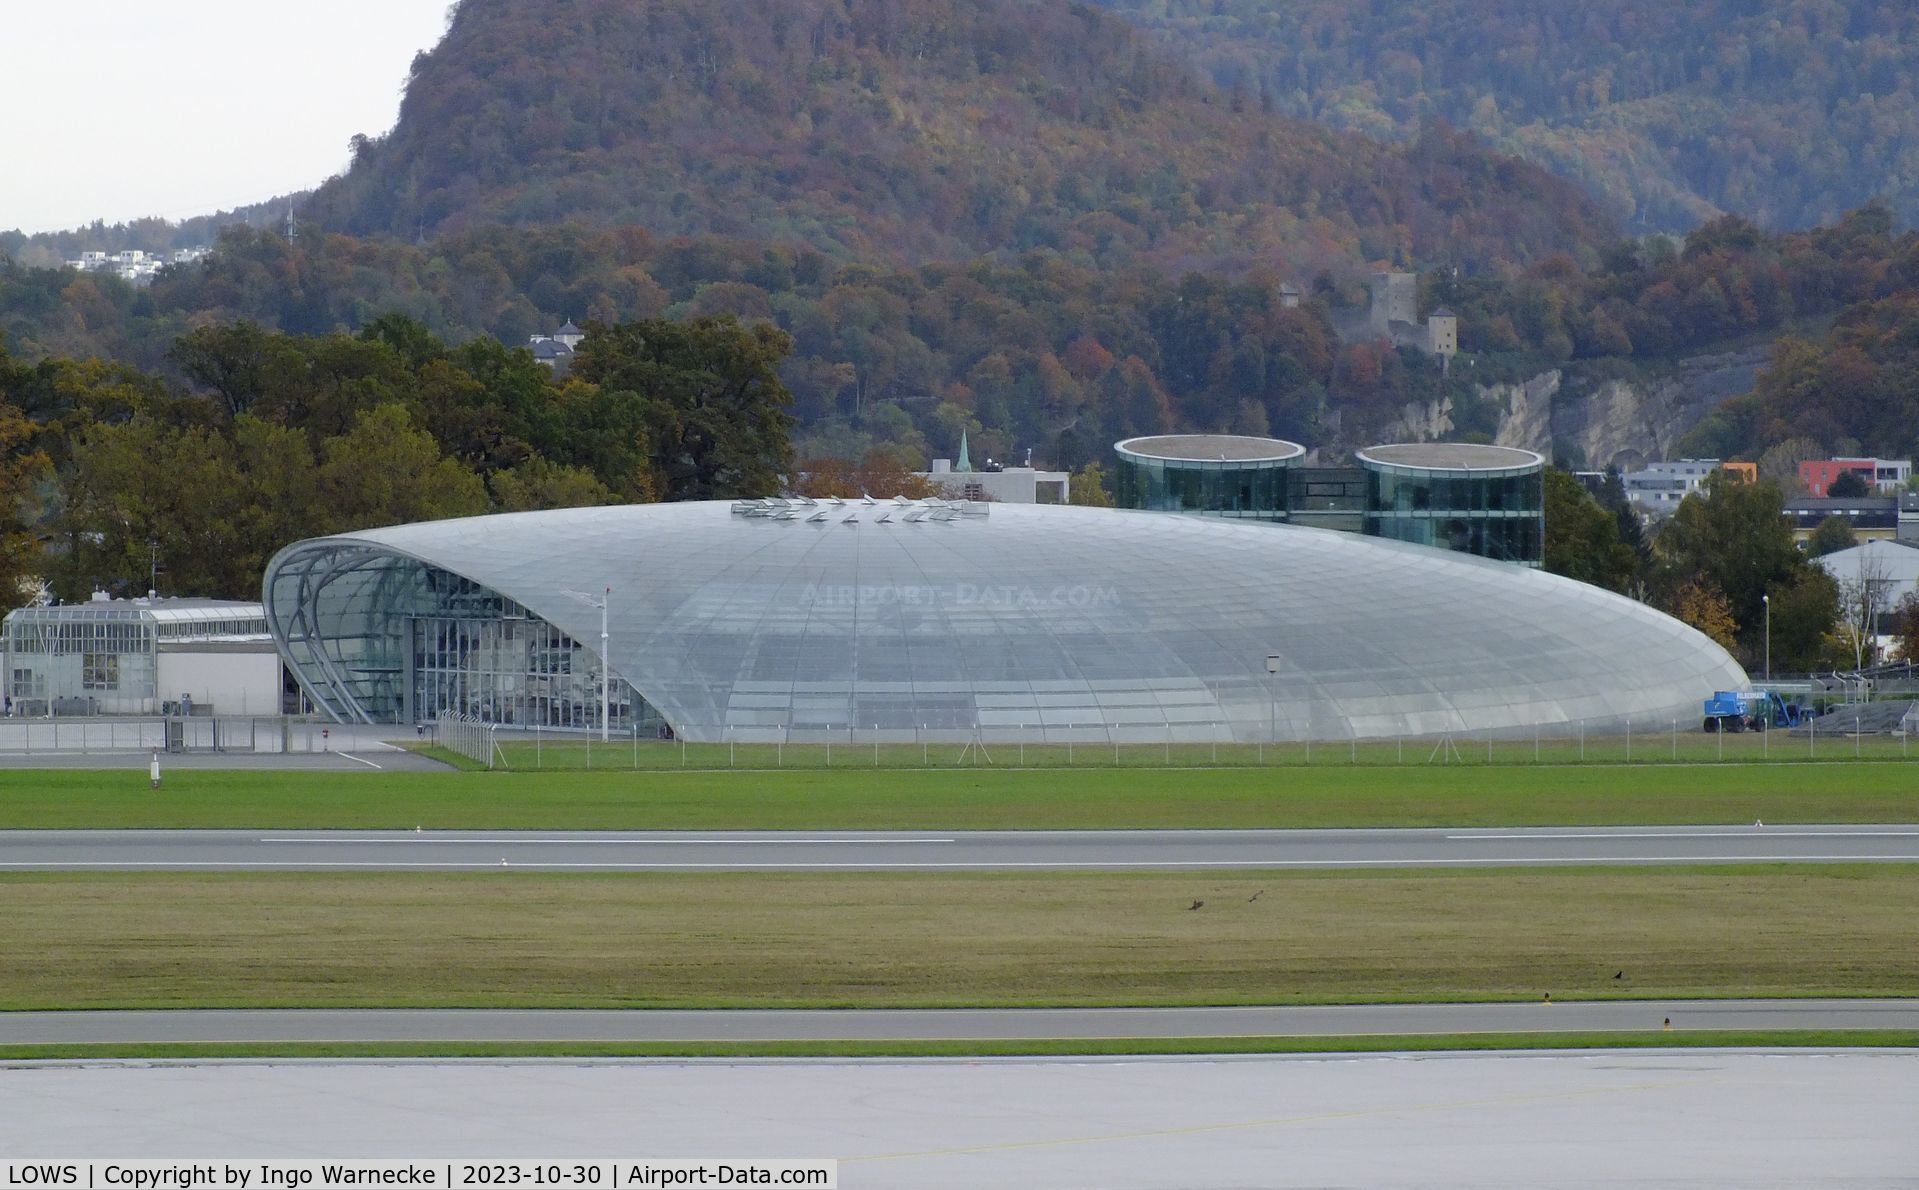 Salzburg Airport, Salzburg Austria (LOWS) - Hangar 7, exhibition hangar of the Red Bull collection at Salzburg airport